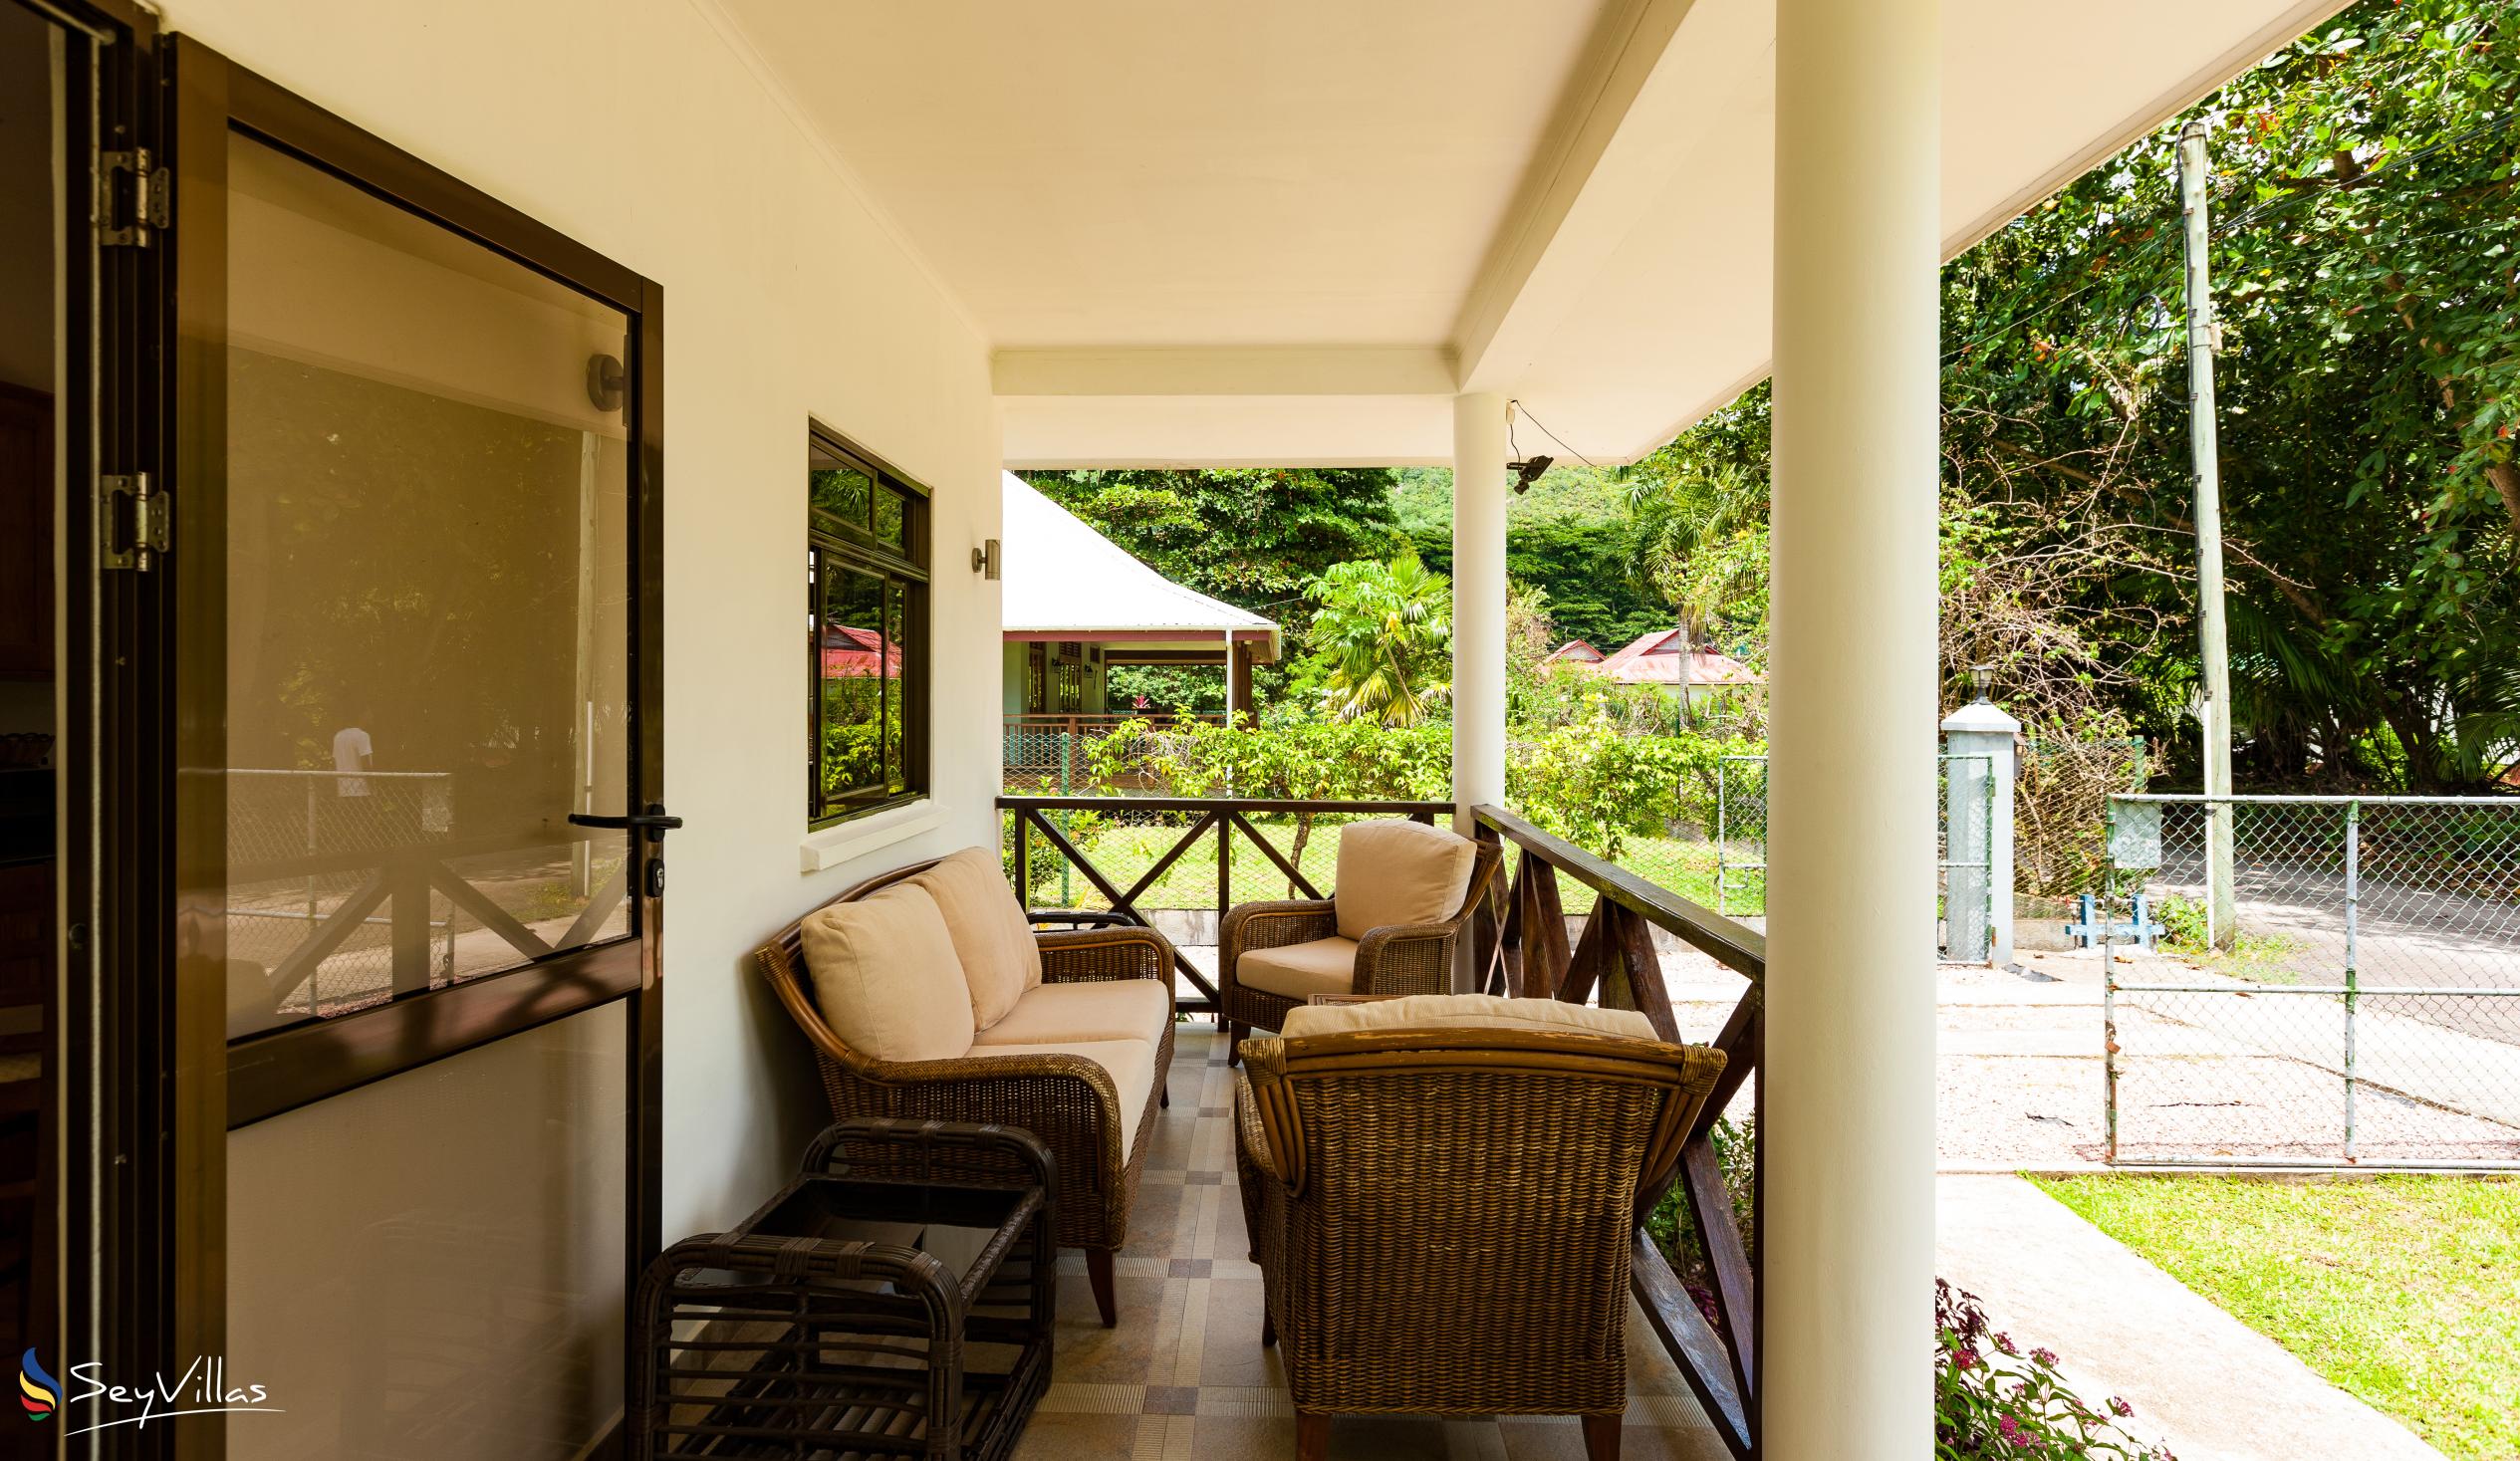 Photo 4: Villa Laure - Outdoor area - Praslin (Seychelles)